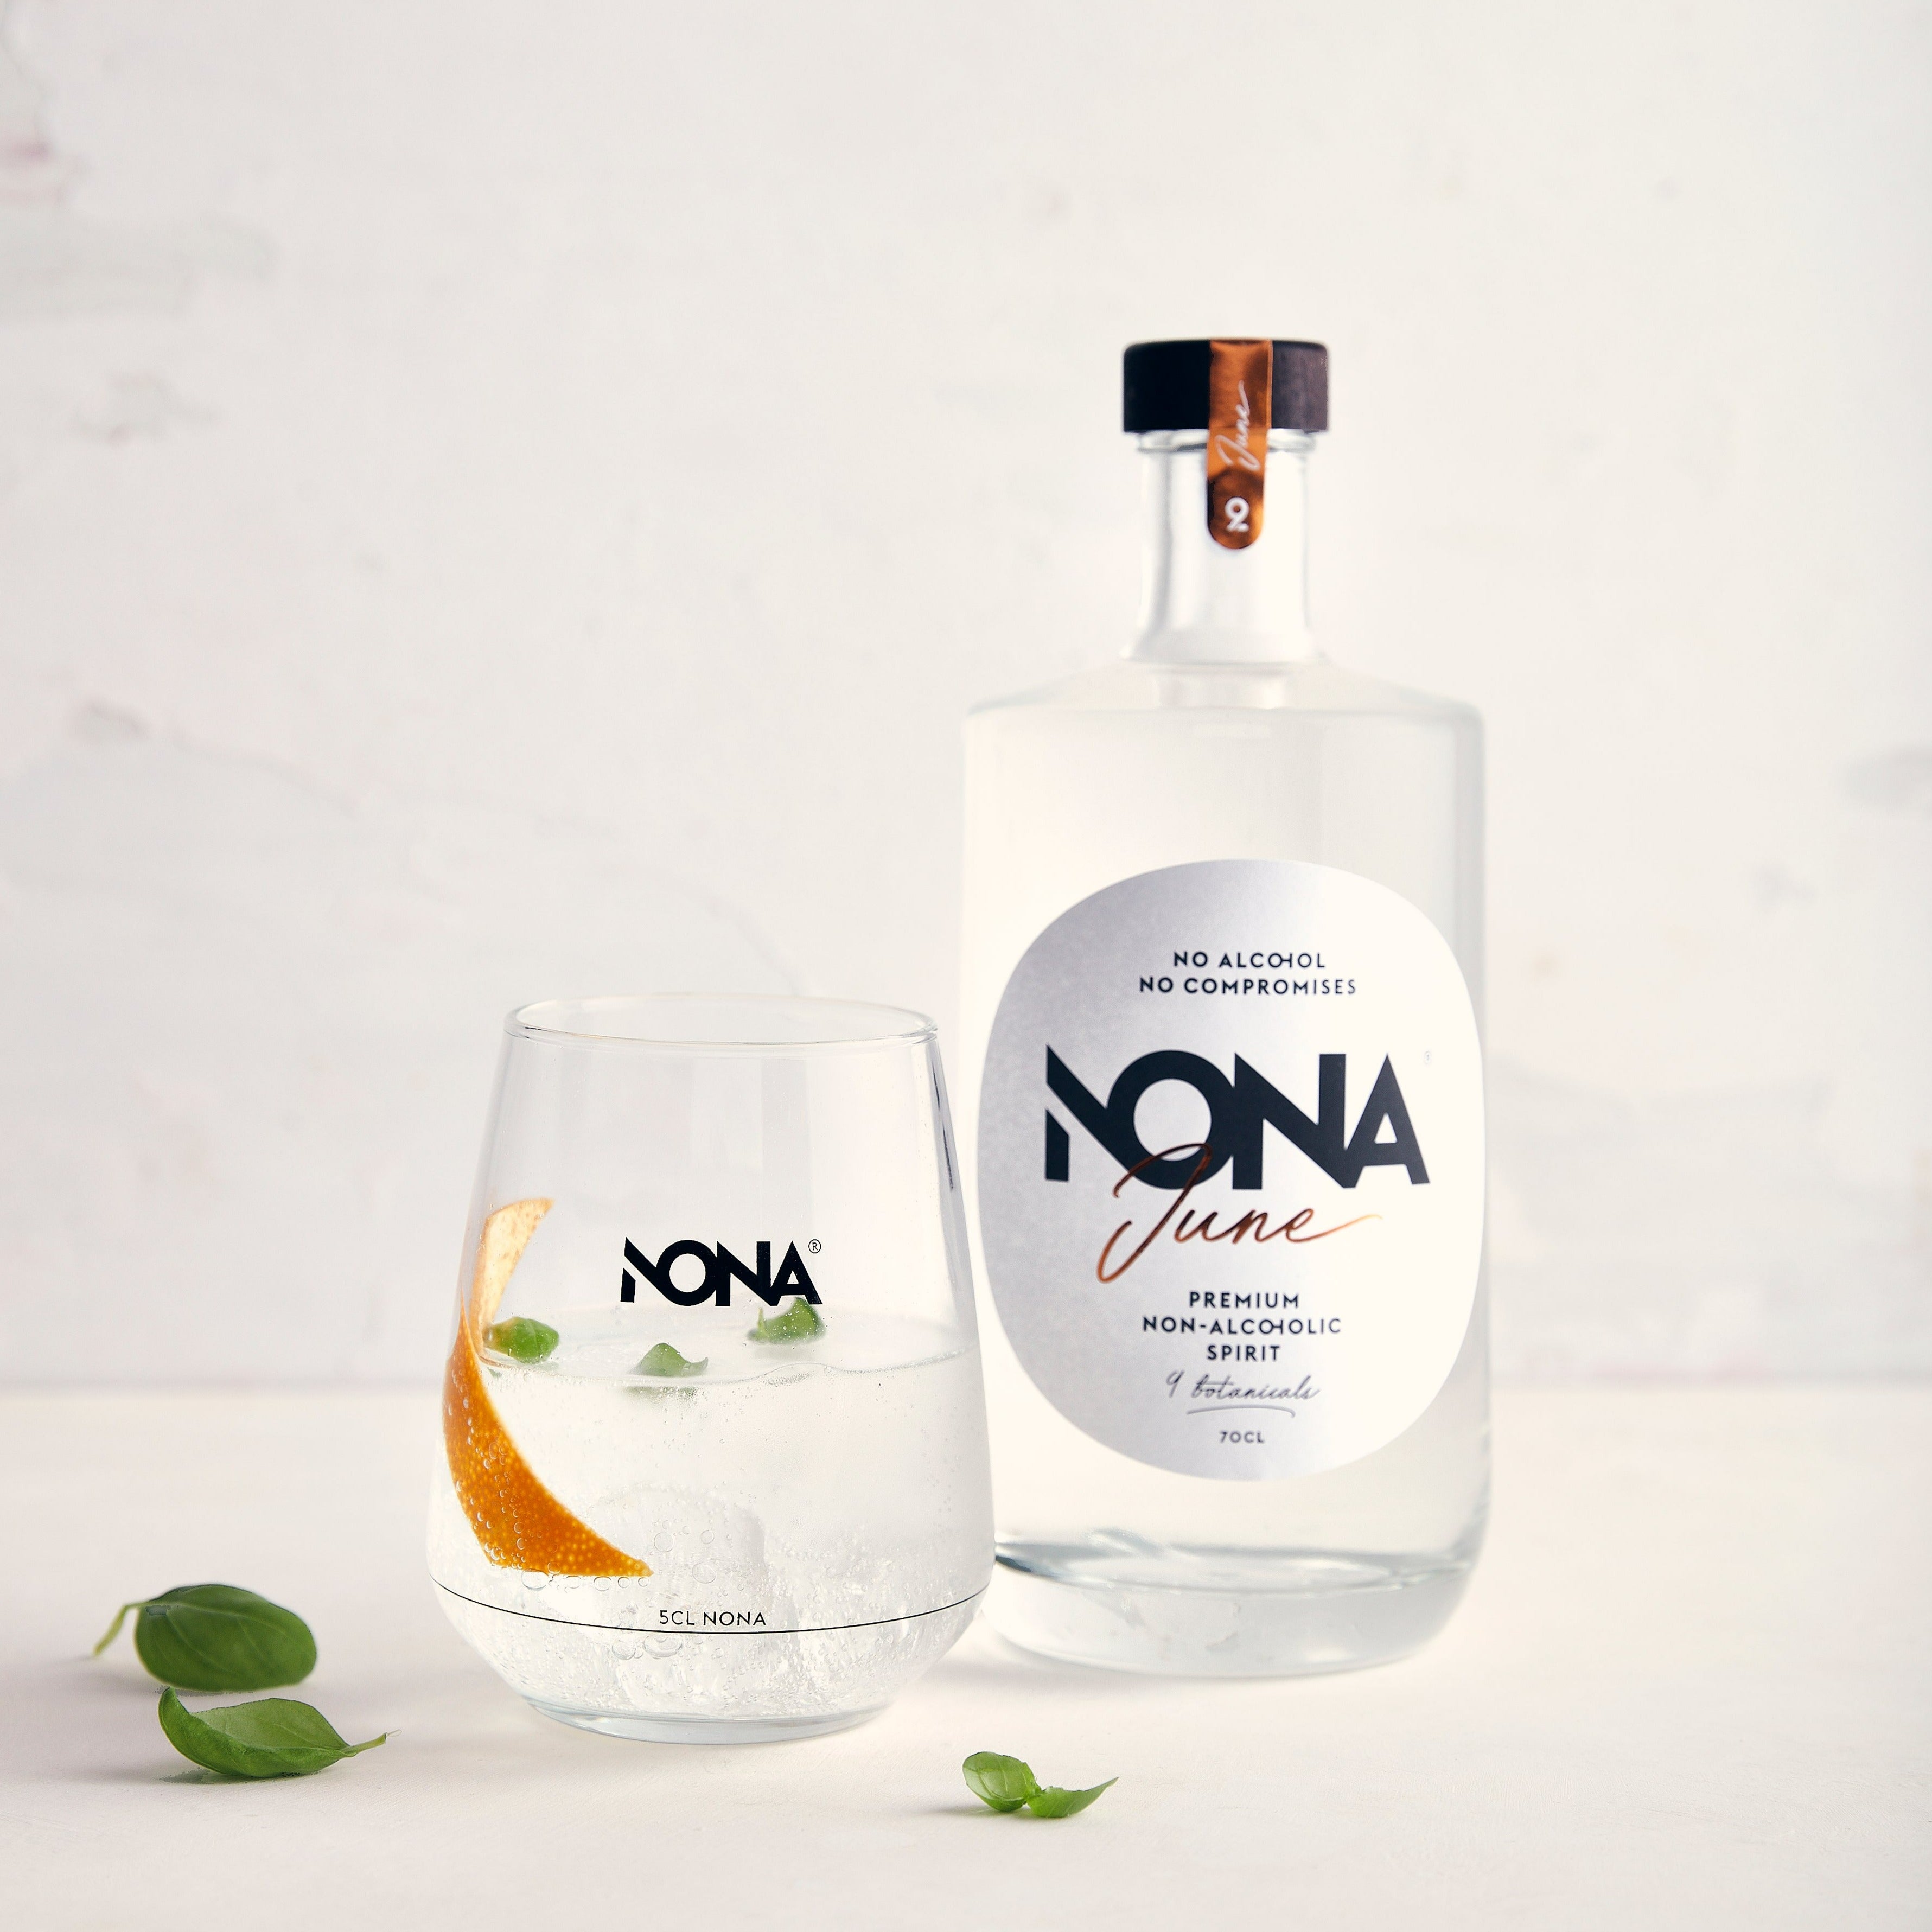 NONA June - Non-alcoholic Gin